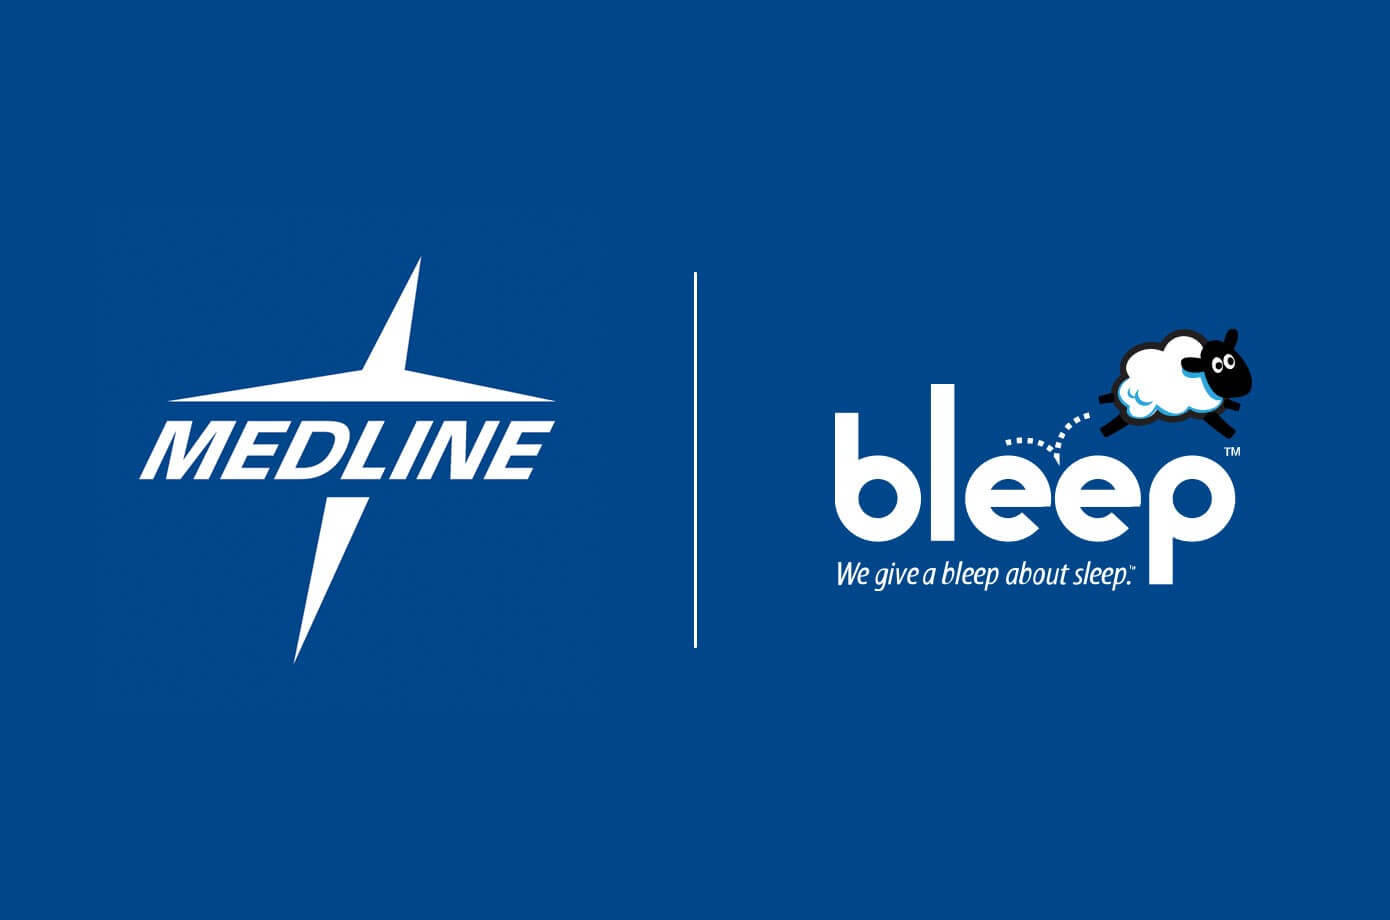 Medline Industries, Inc. Announces CPAP Partnership with Bleep LLC